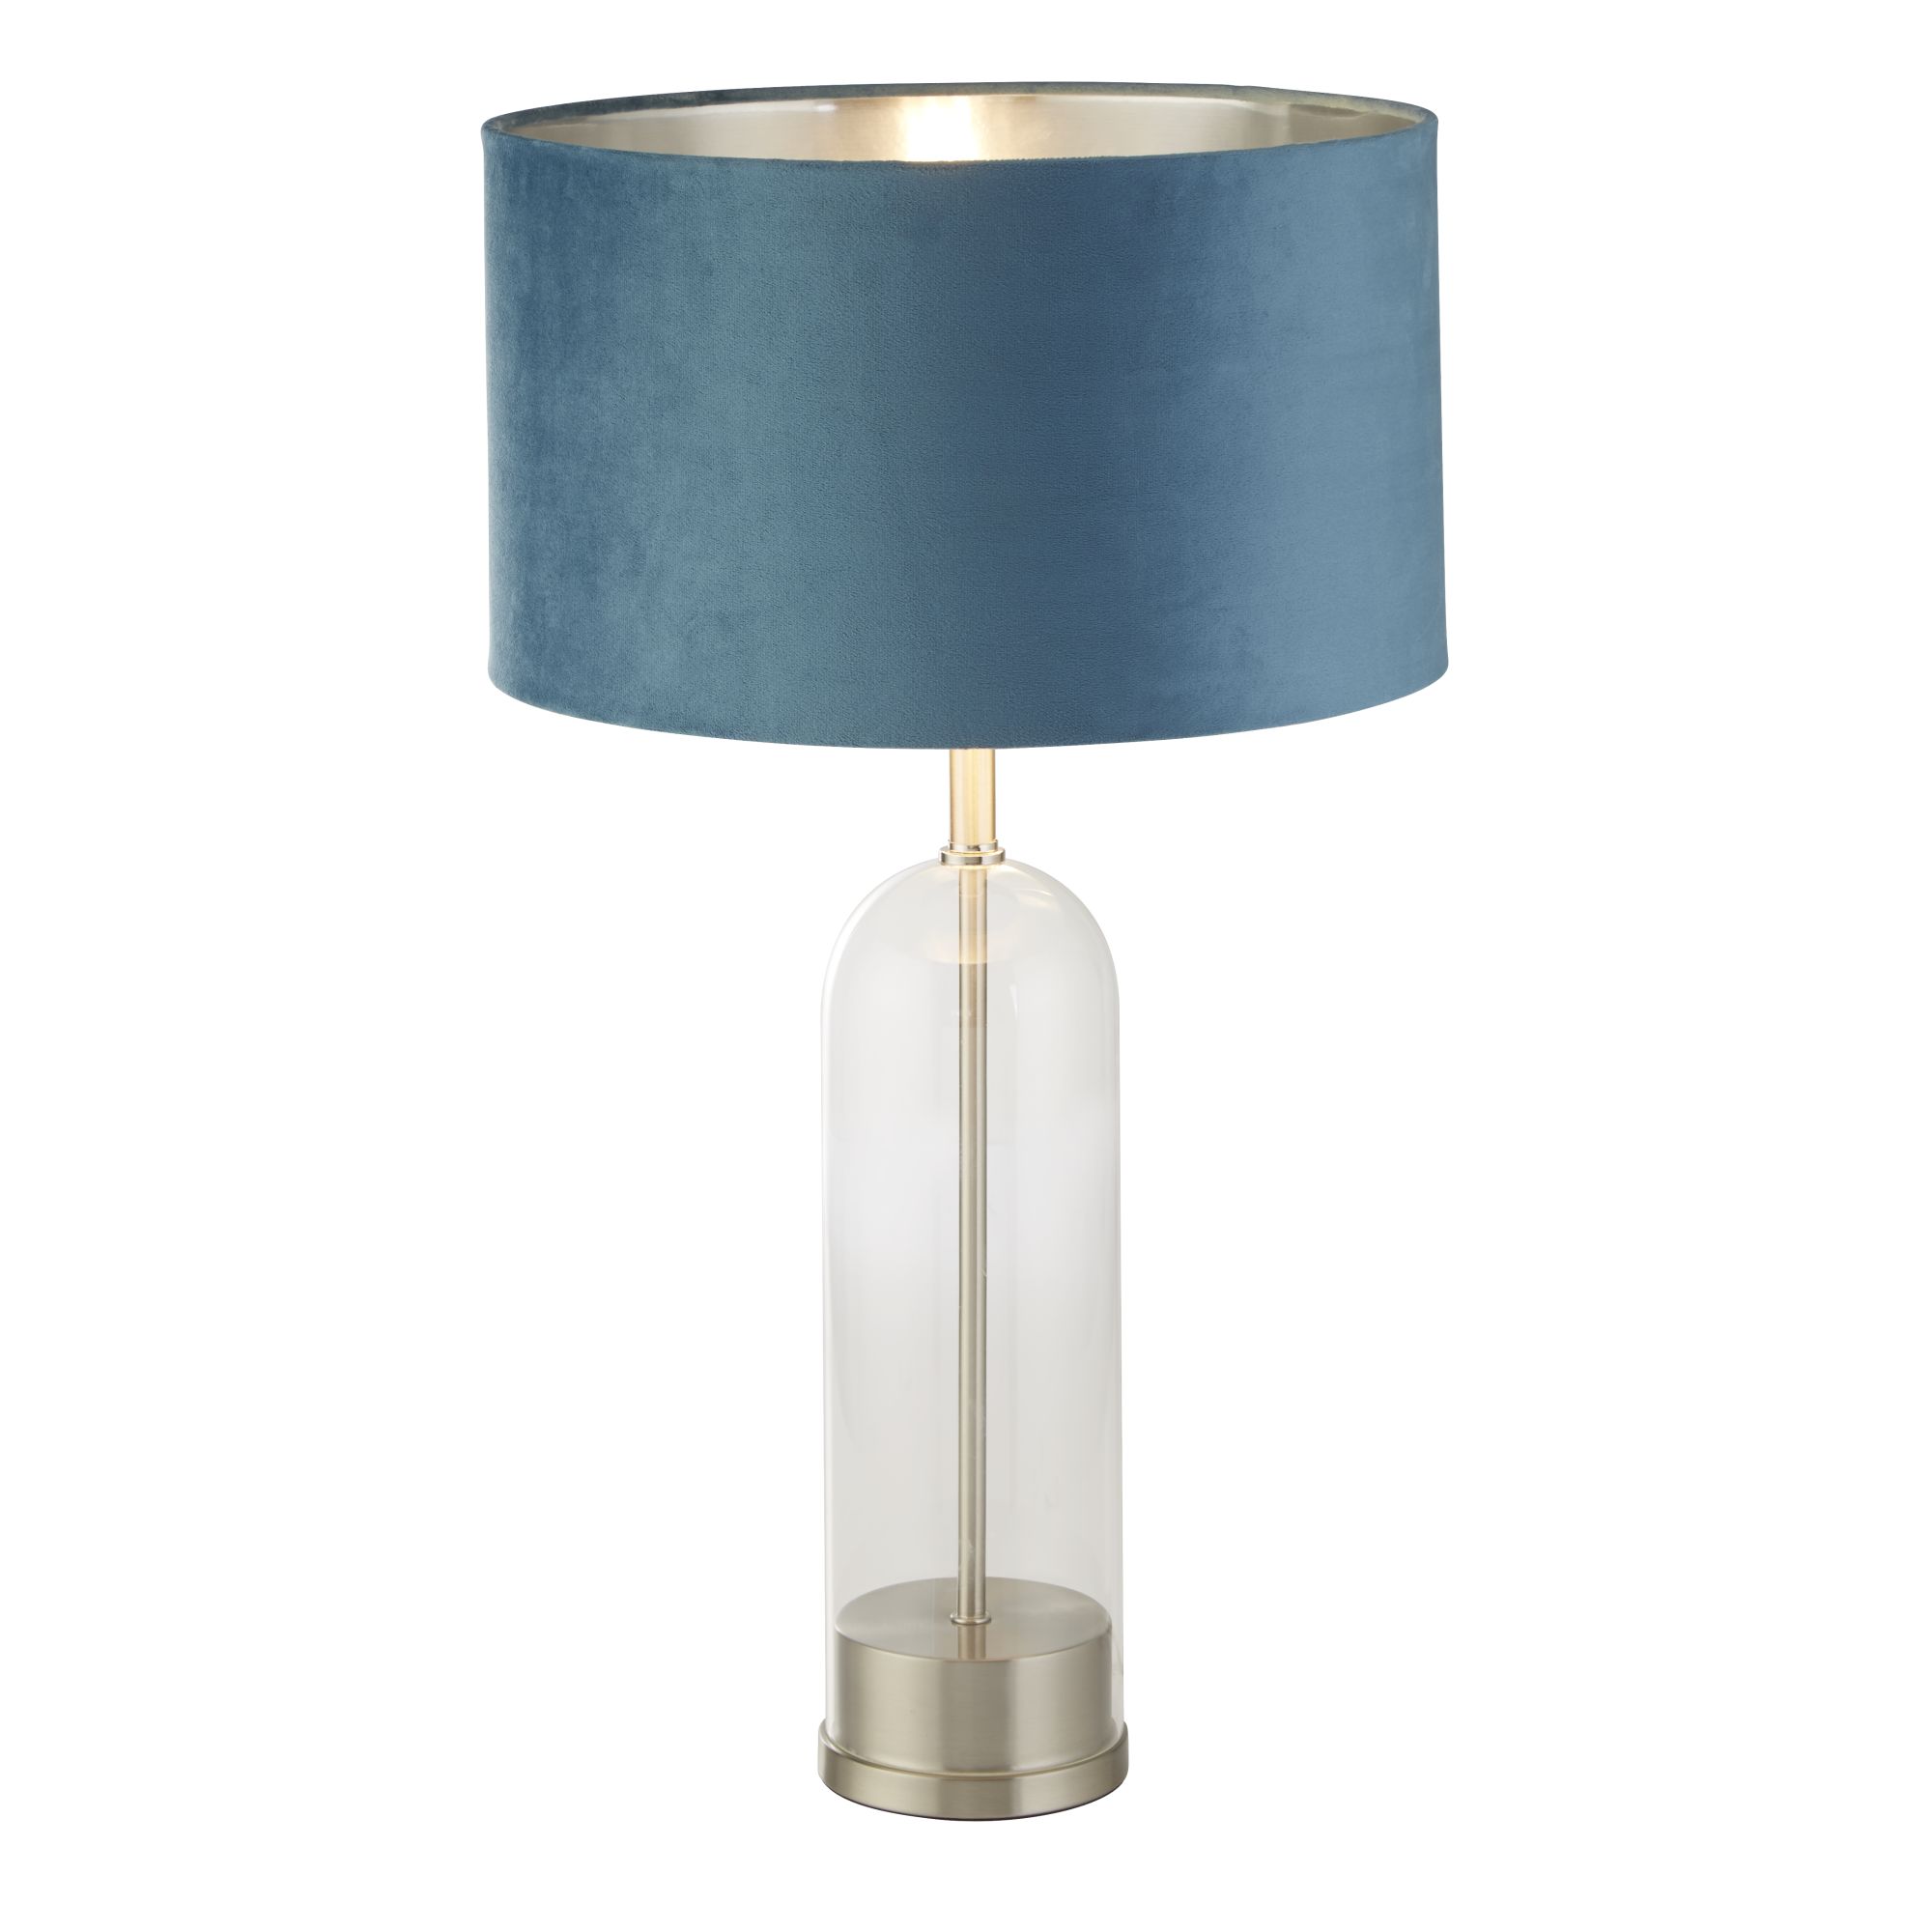 Oxford Table Lamp - Glass, Satin Nickel & Teal Velvet Shade